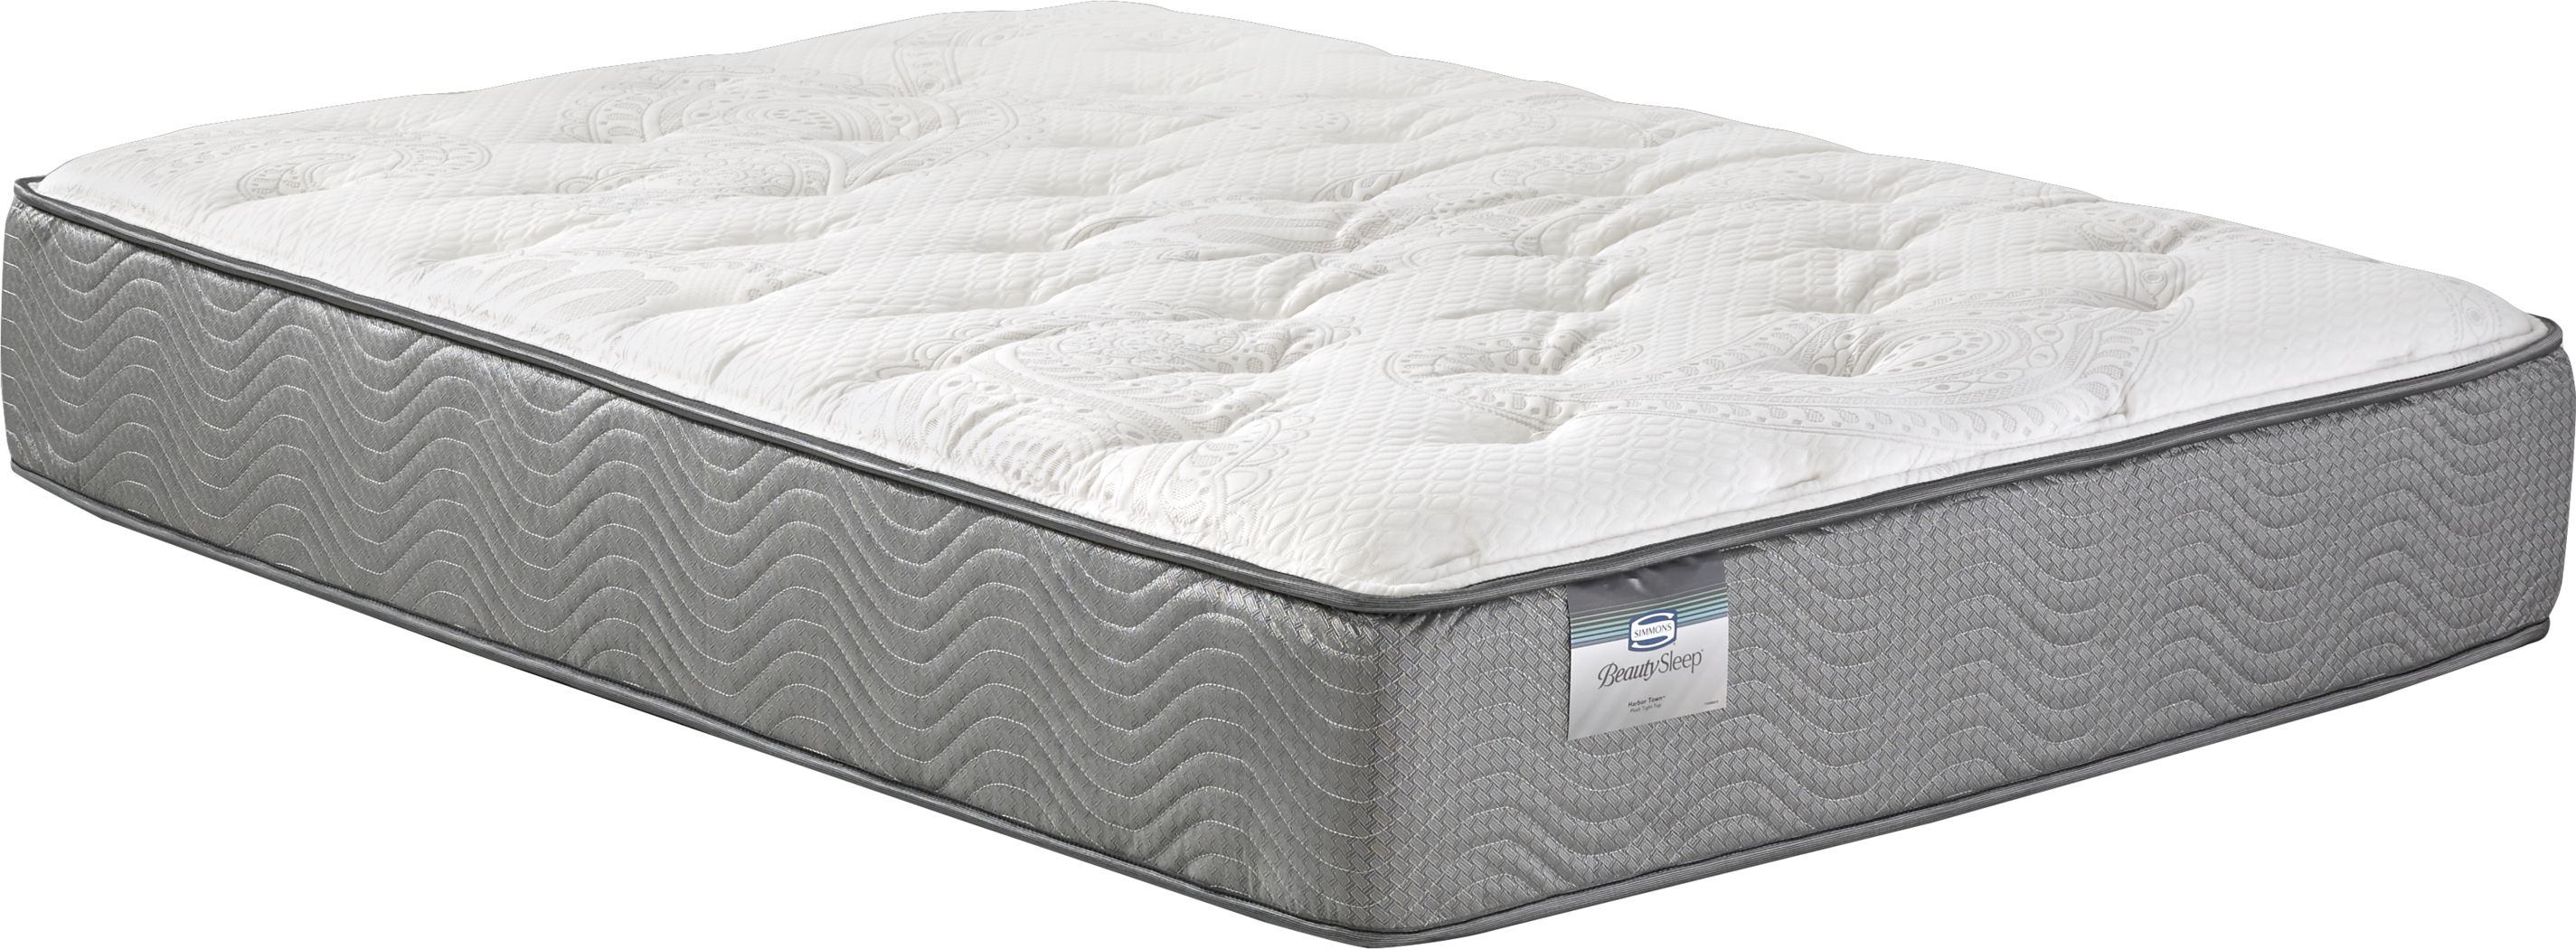 beauty sleep harbortown mattress reviews